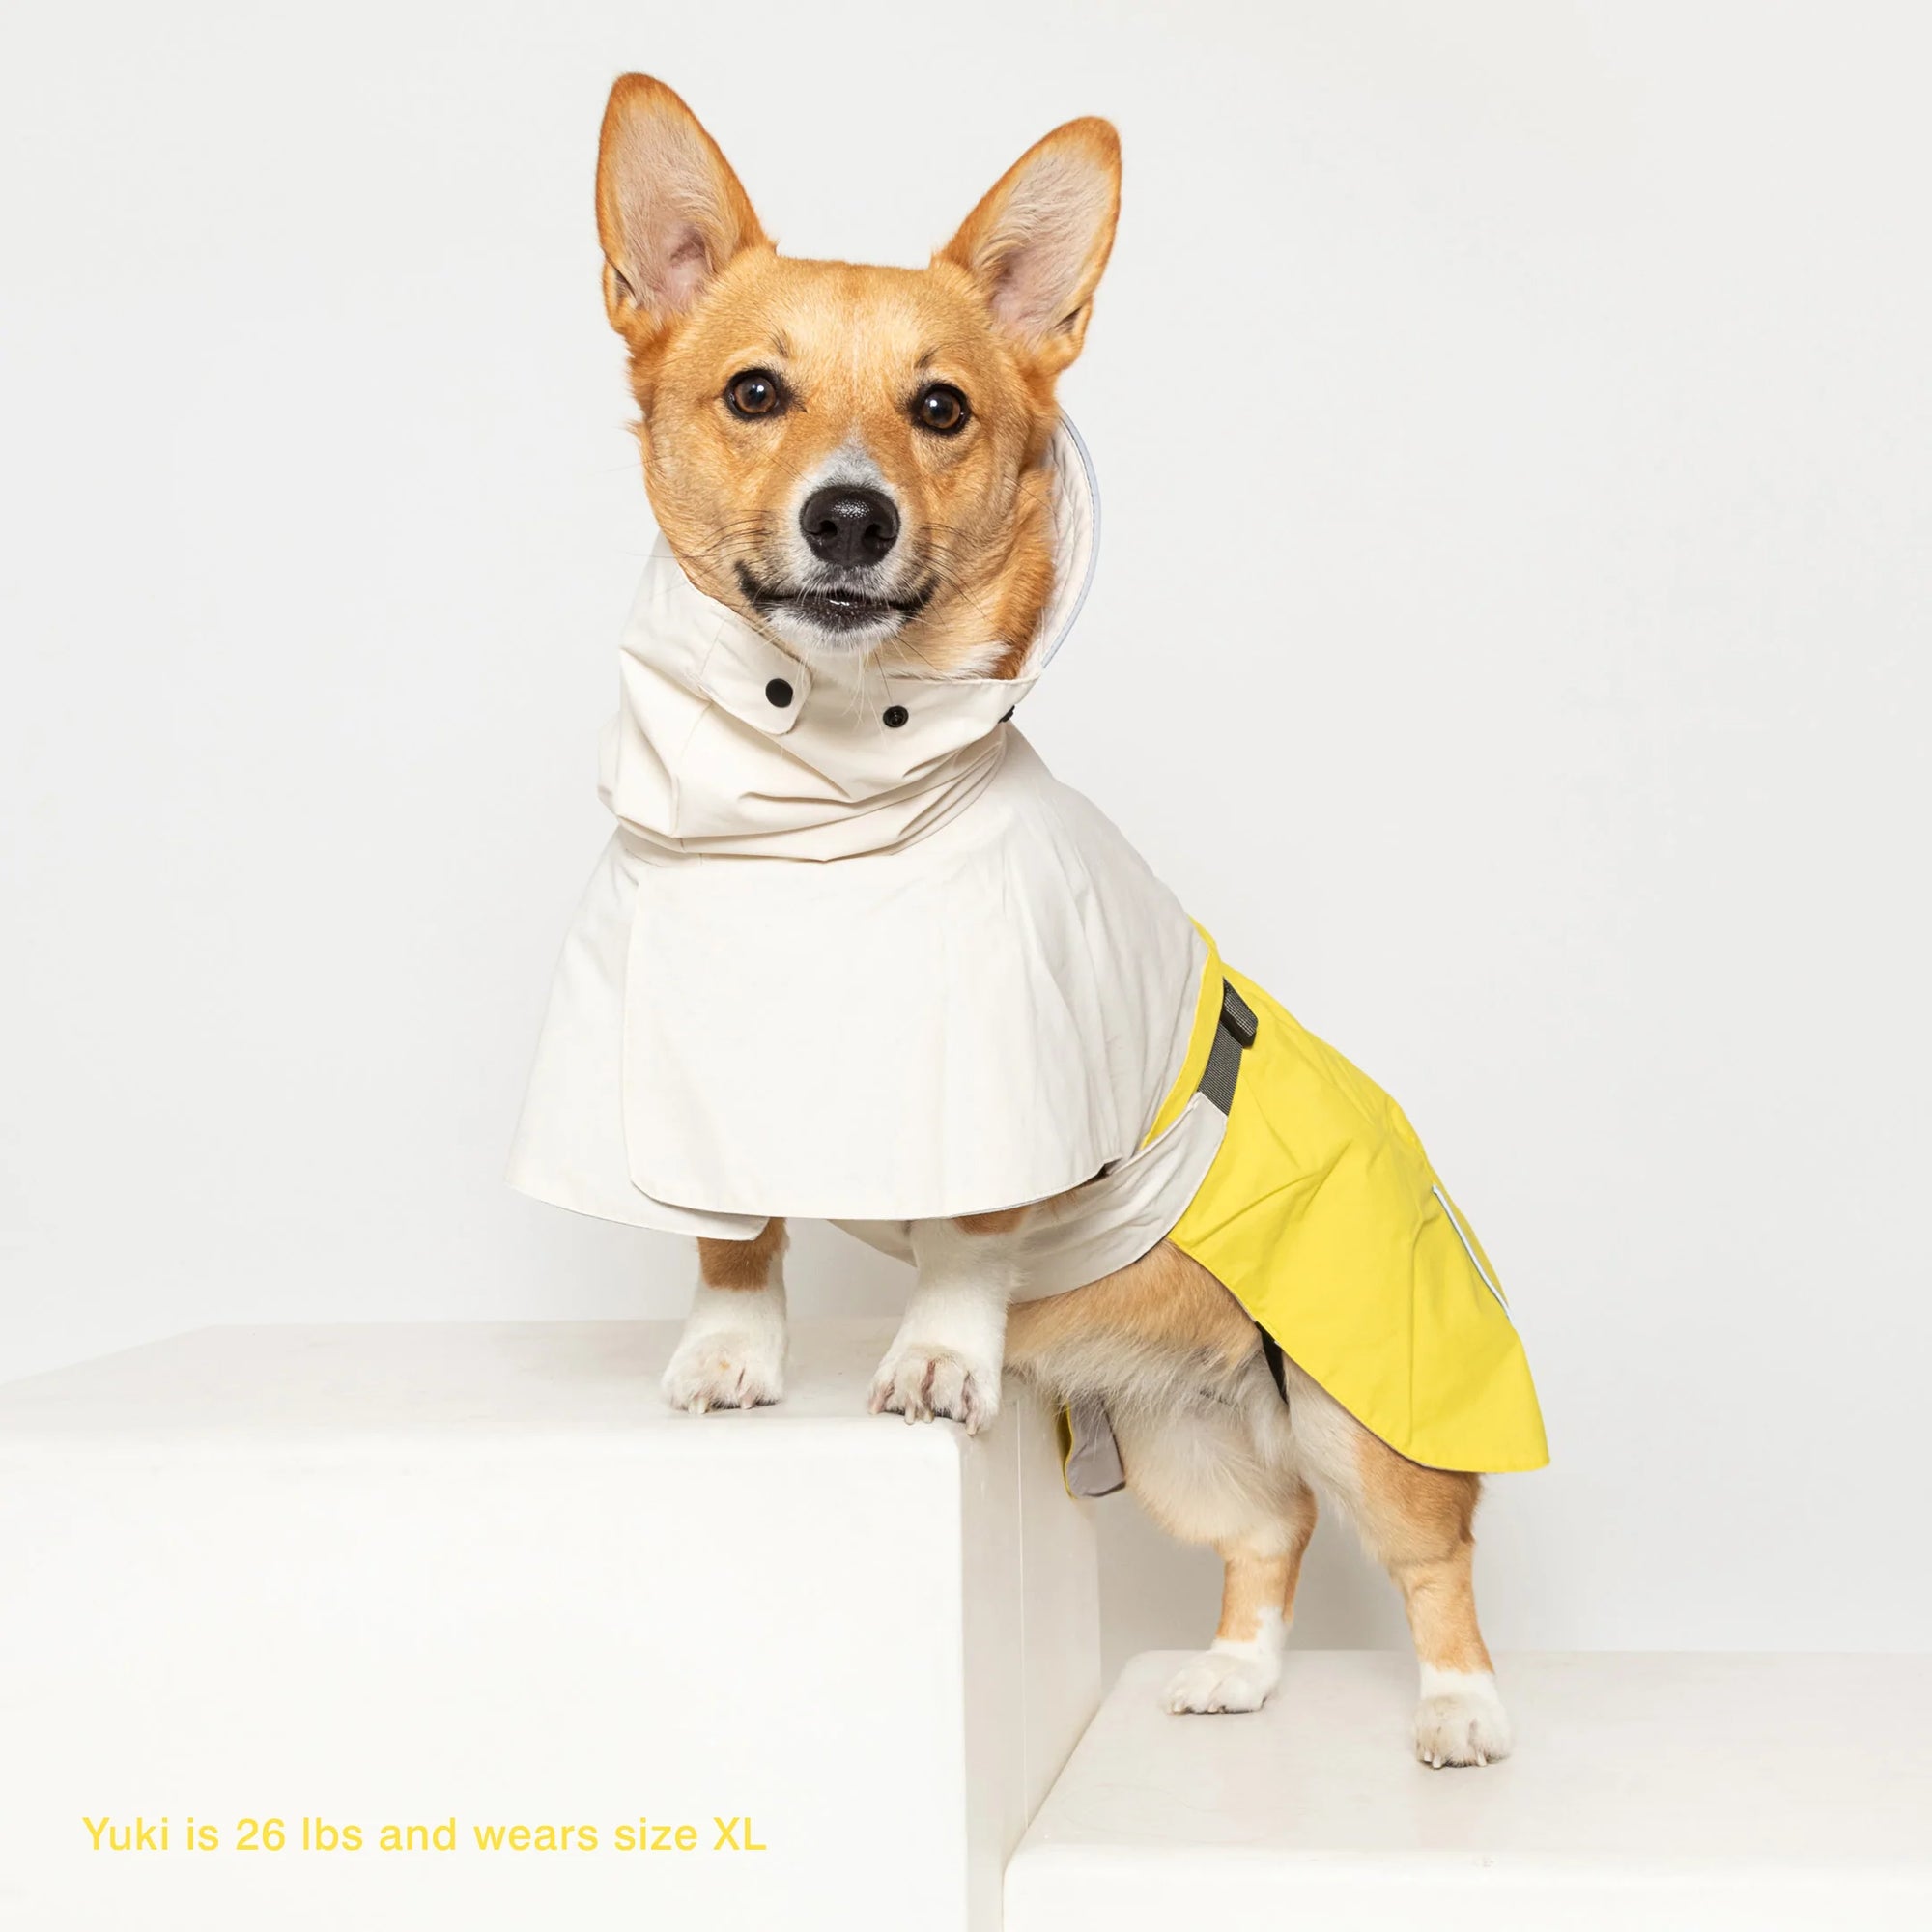 Corgi named Yuki, 26 lbs, models a size XL cream and yellow raincoat.